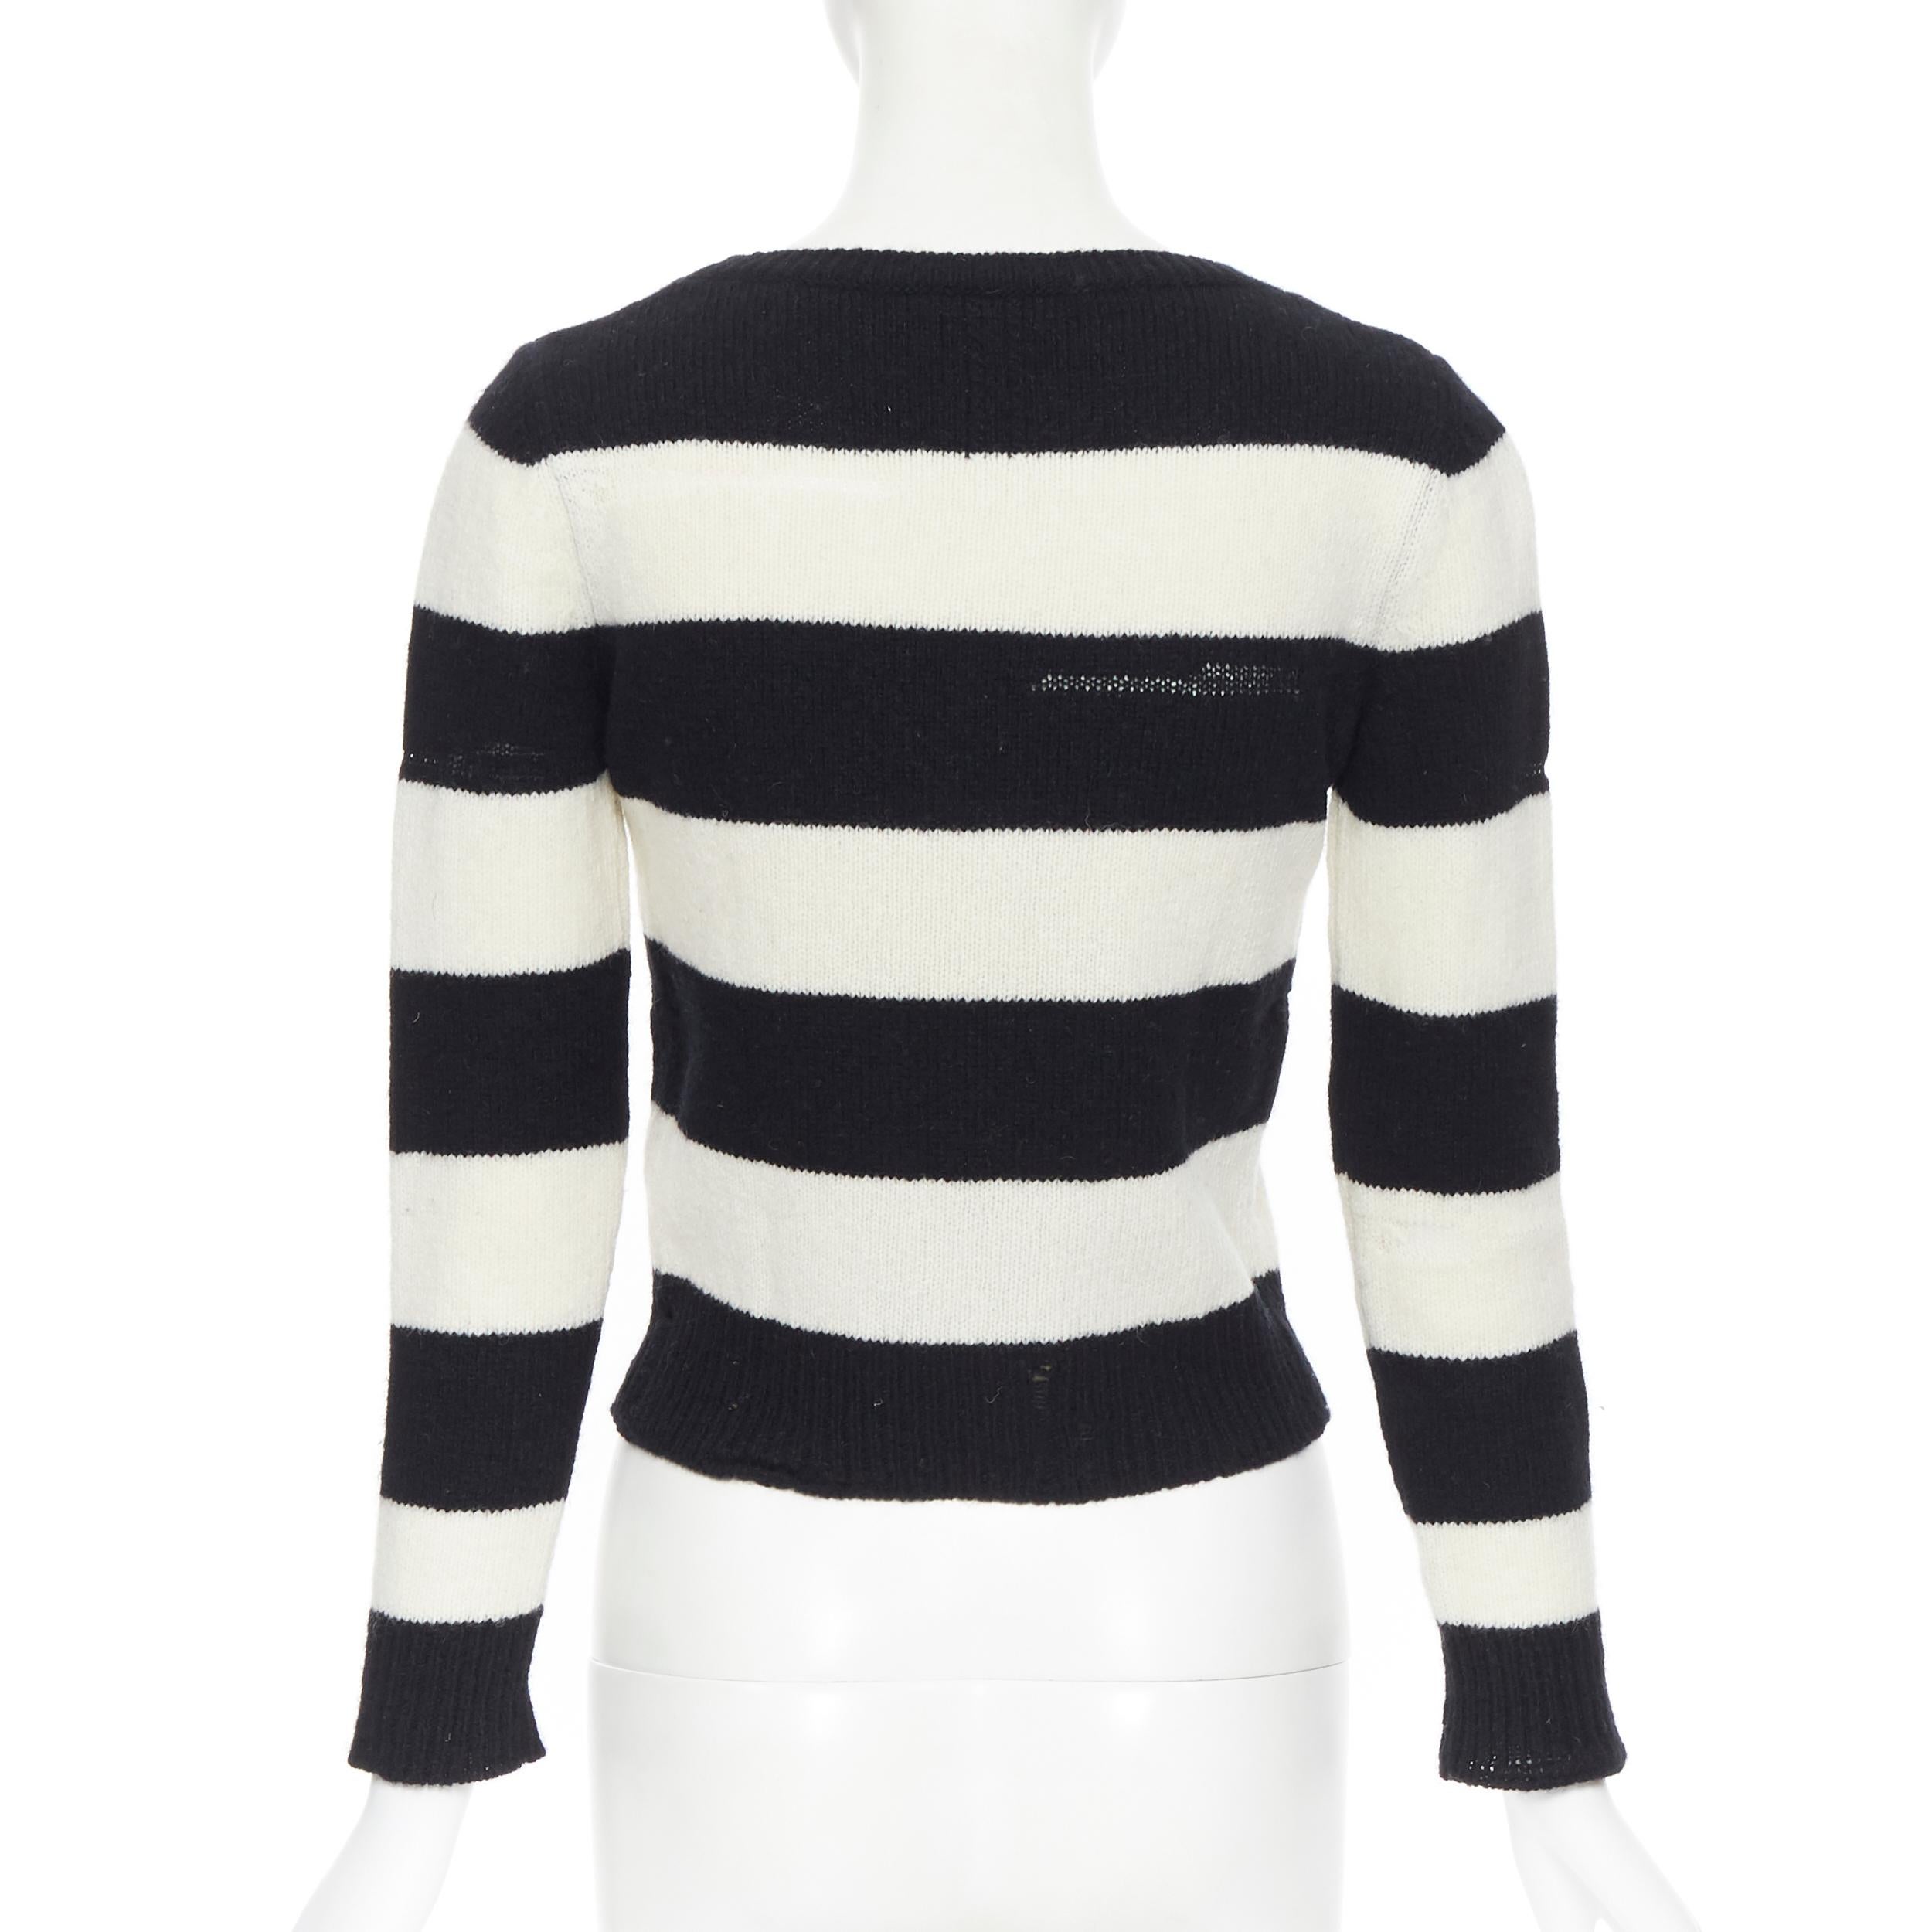 Black SAINT LAURENT 2015 black white striped distressed holey knit sweater top XS